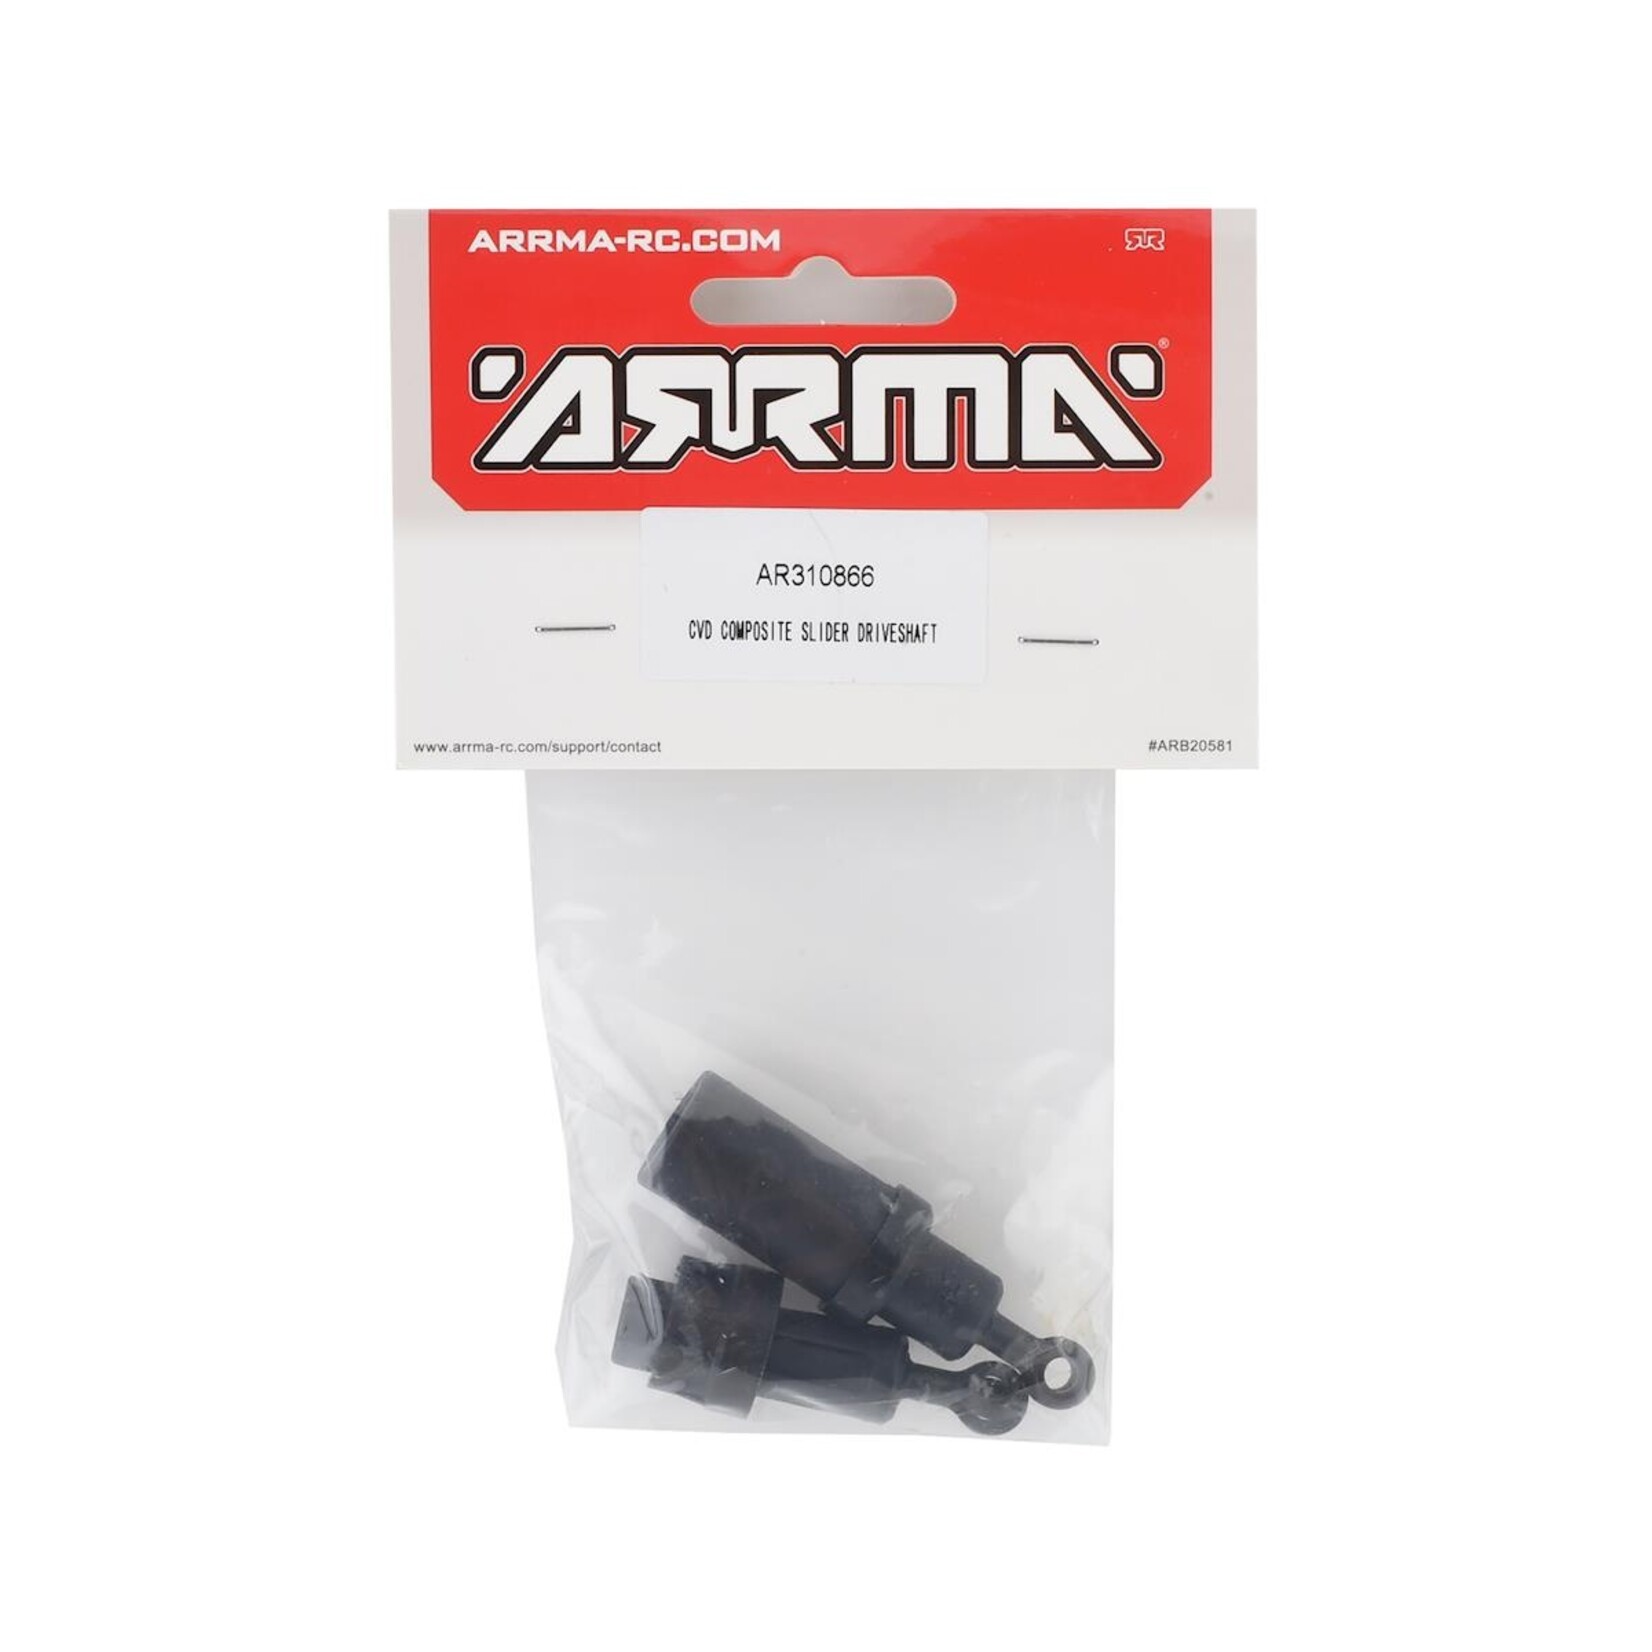 ARRMA Arrma 4X4 Mega CVD Composite Slider #AR310866